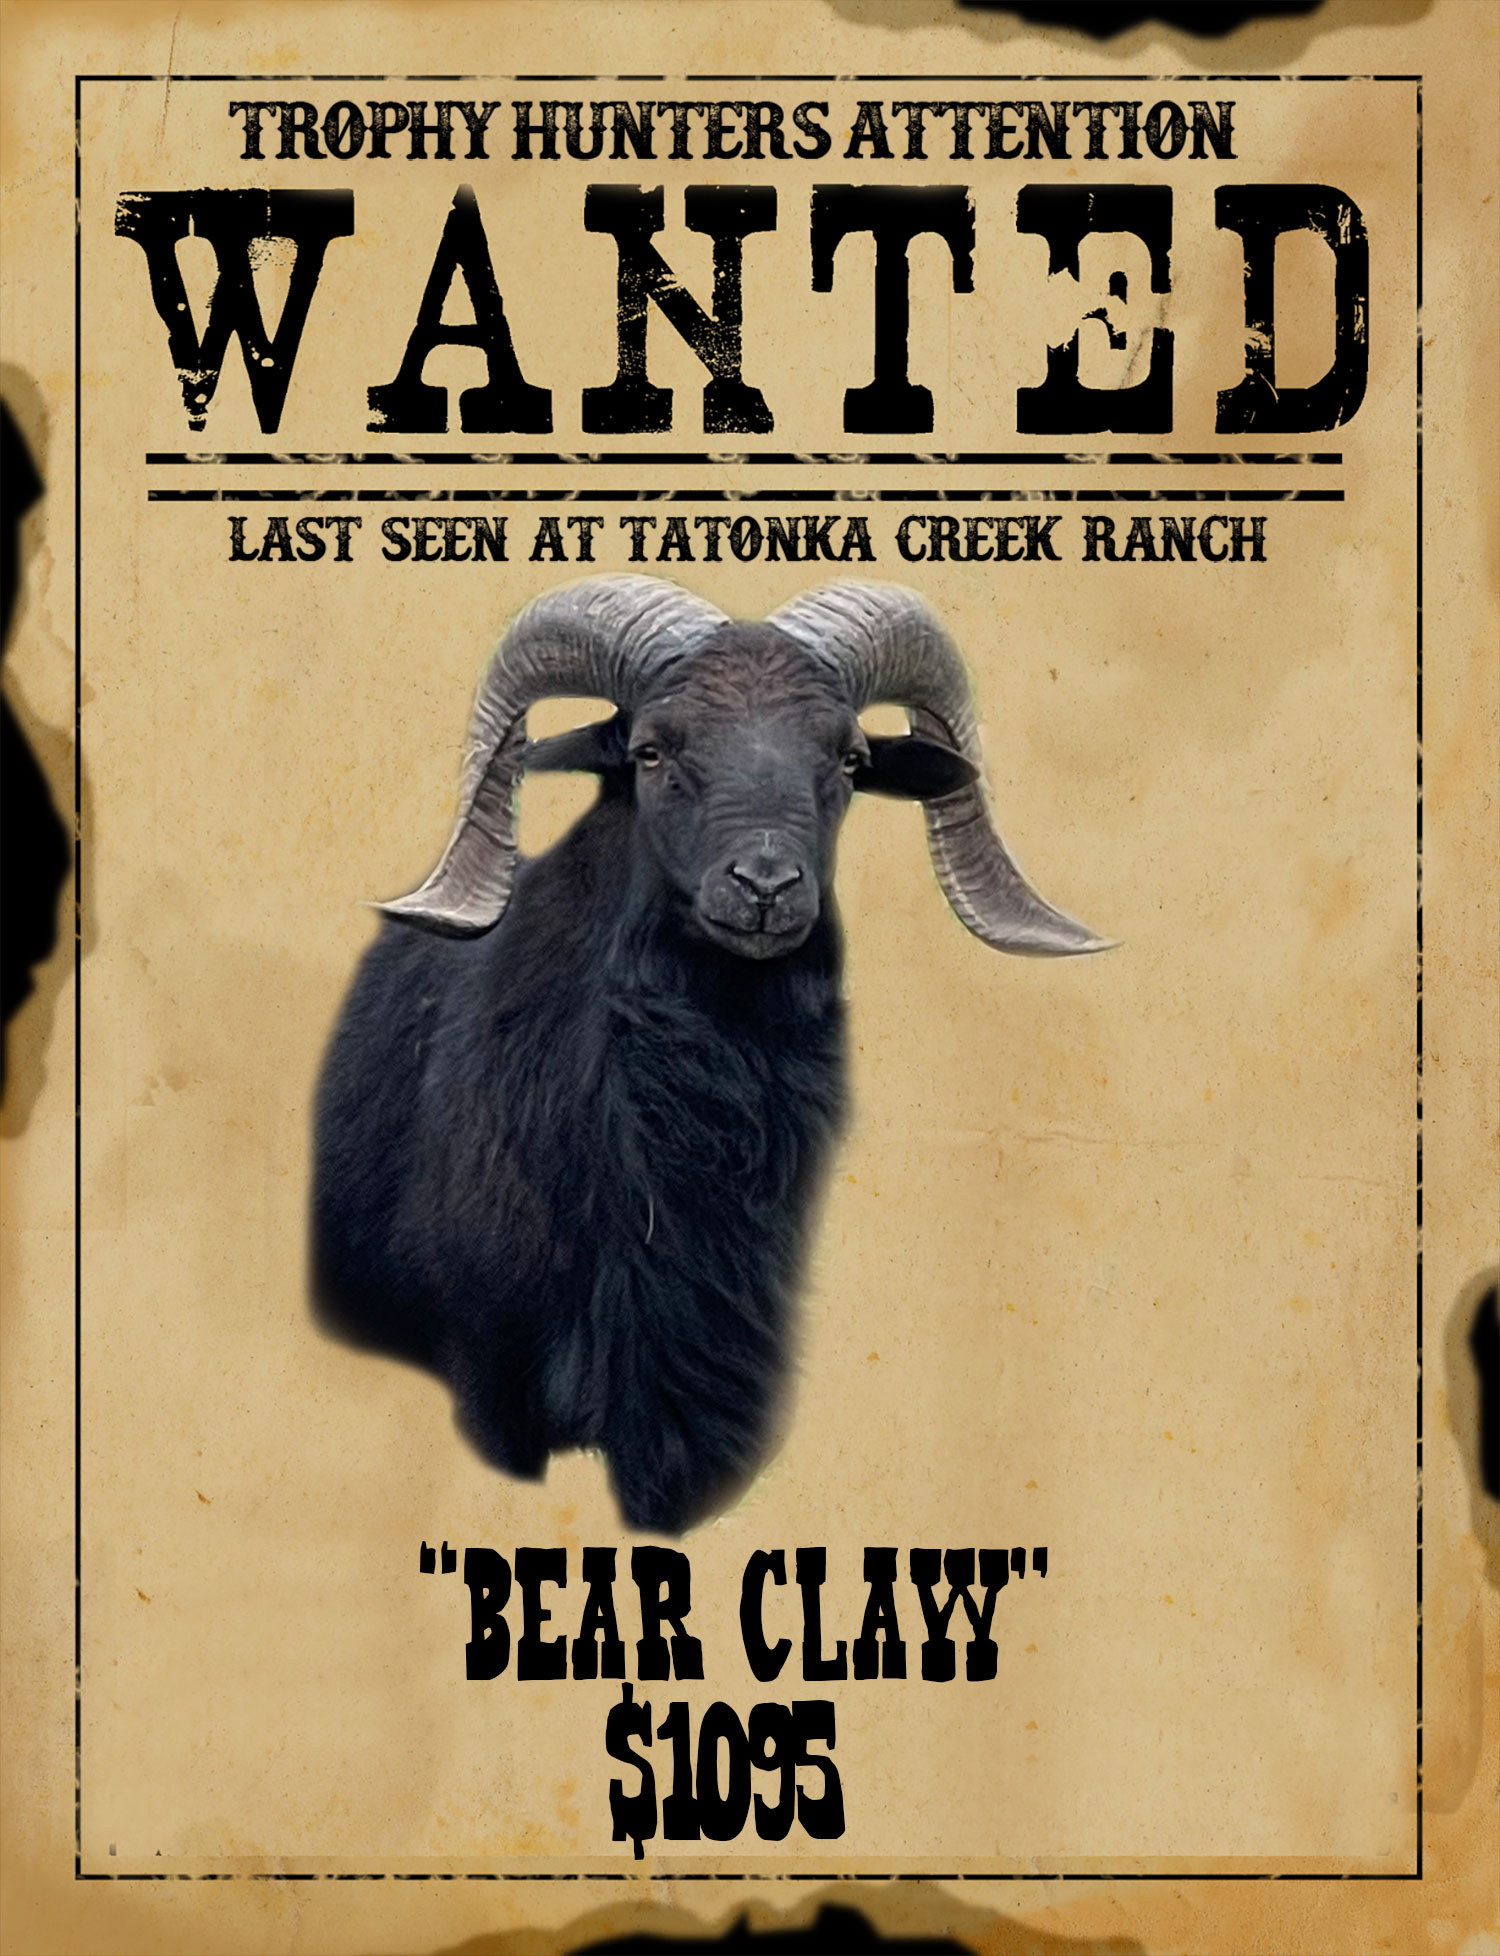 black sheep hunt in south texas